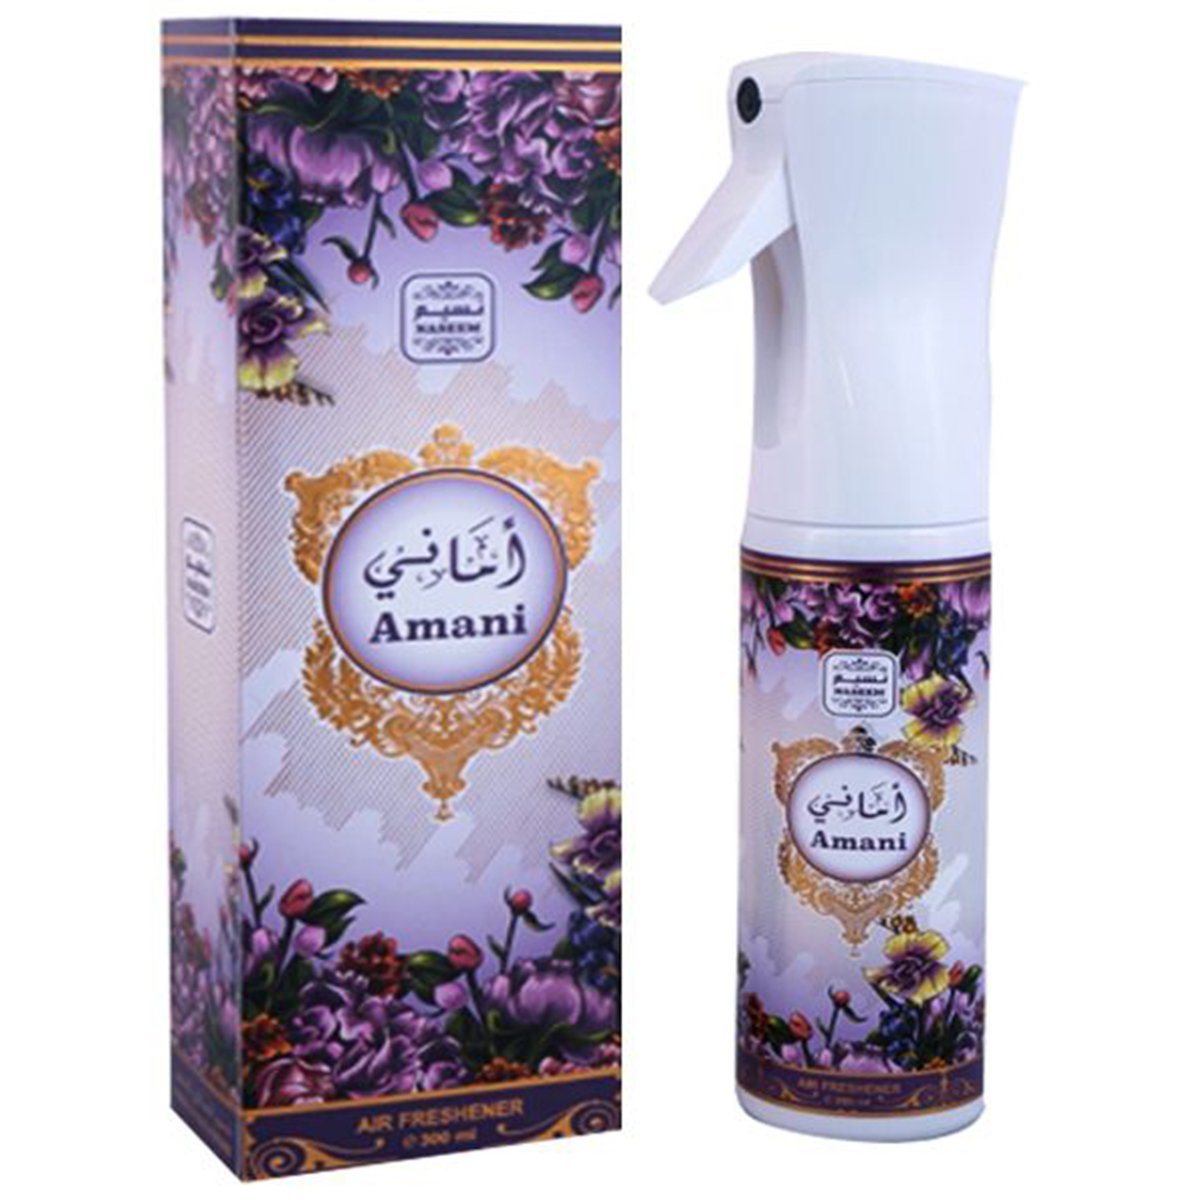 Amani Air Freshener 300ml By Naseem-almanaar Islamic Store